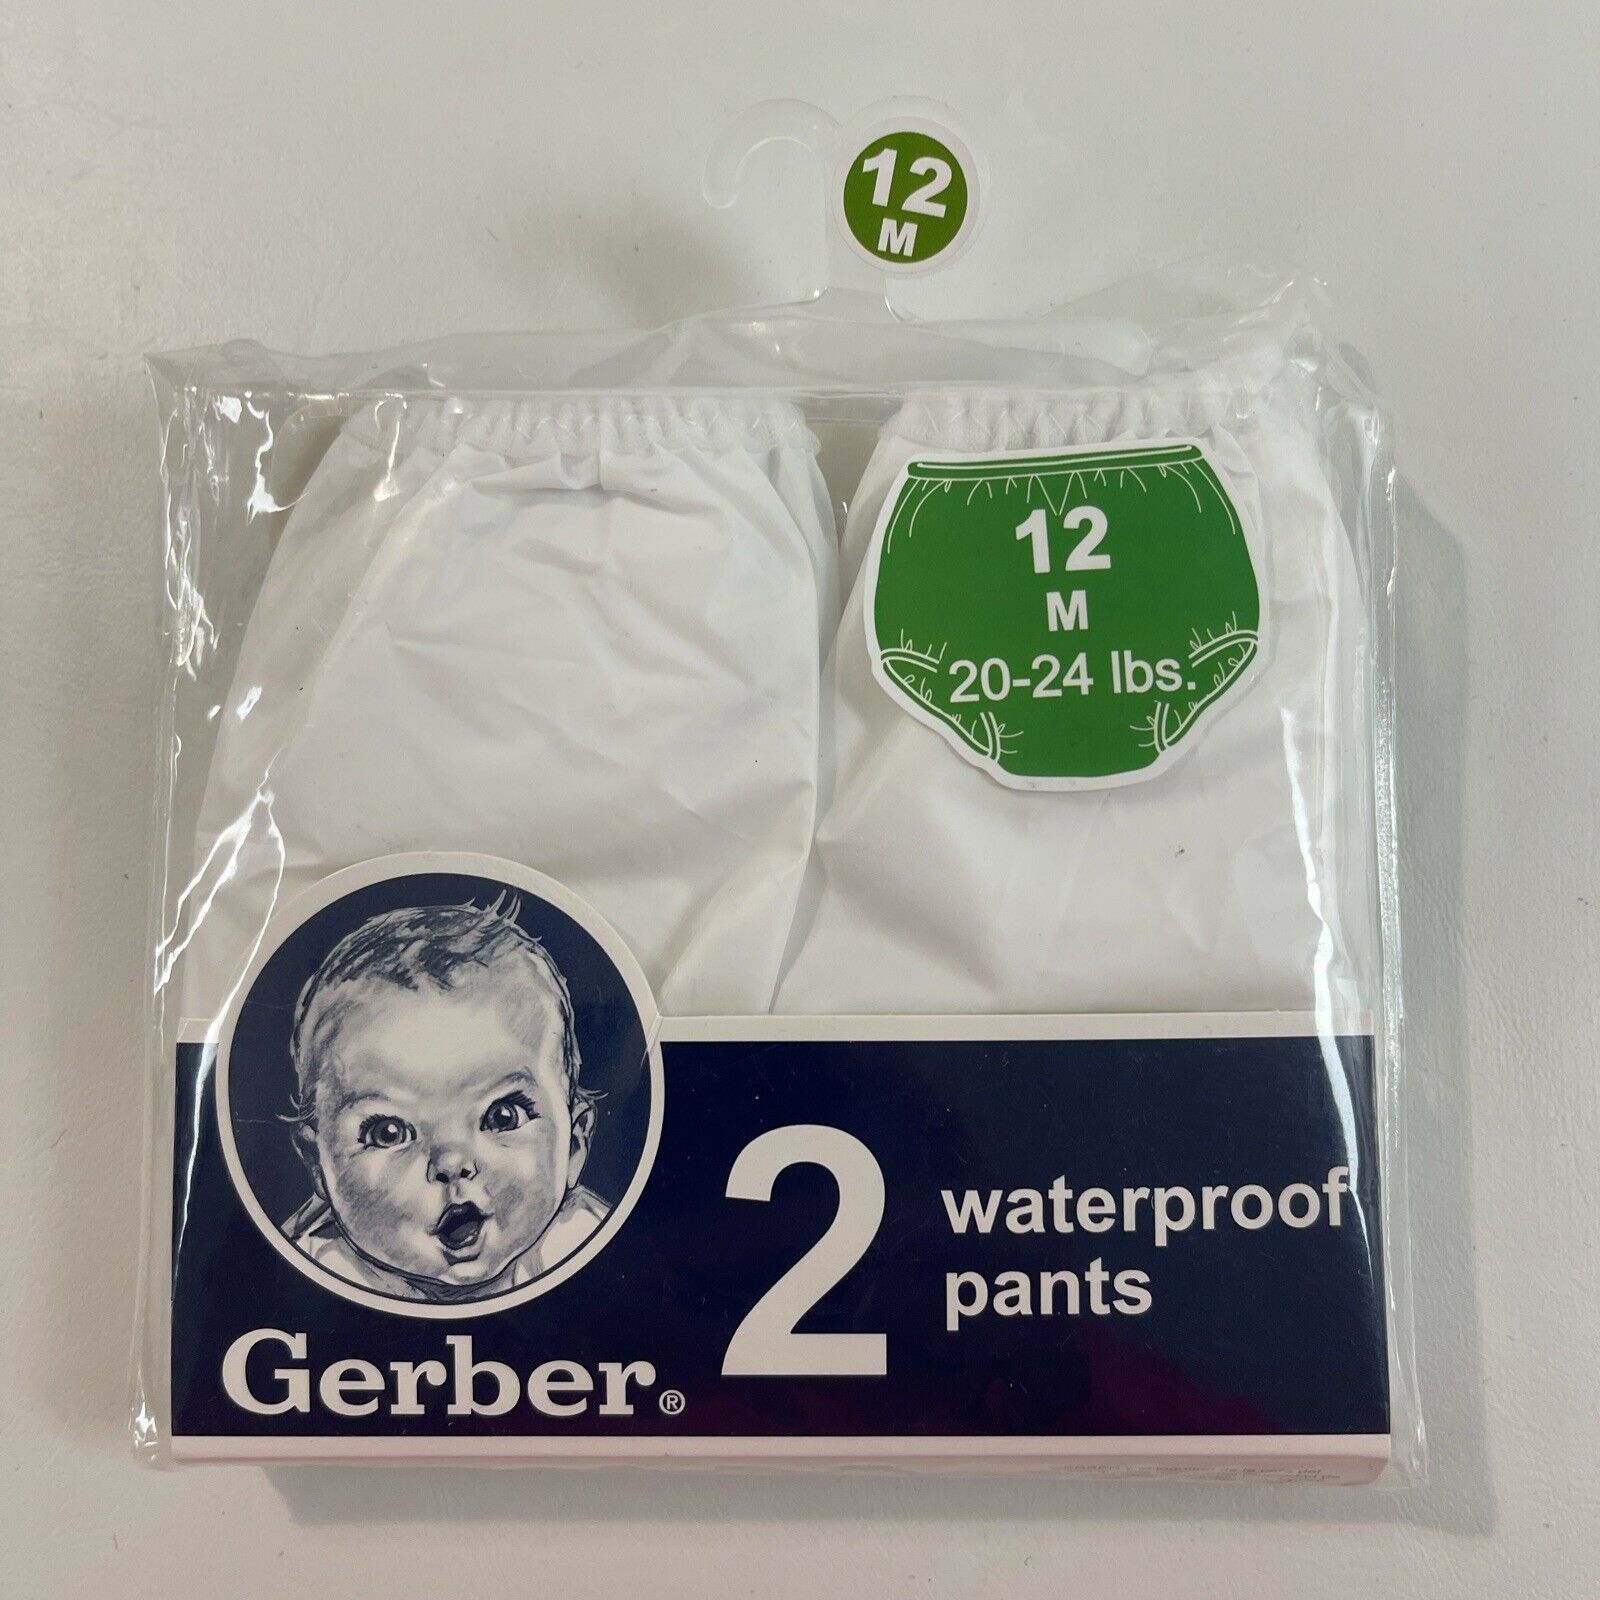 Gerber Waterproof Pants 2 Cloth Diaper Covers Size 12 Mo 20-24 Lbs